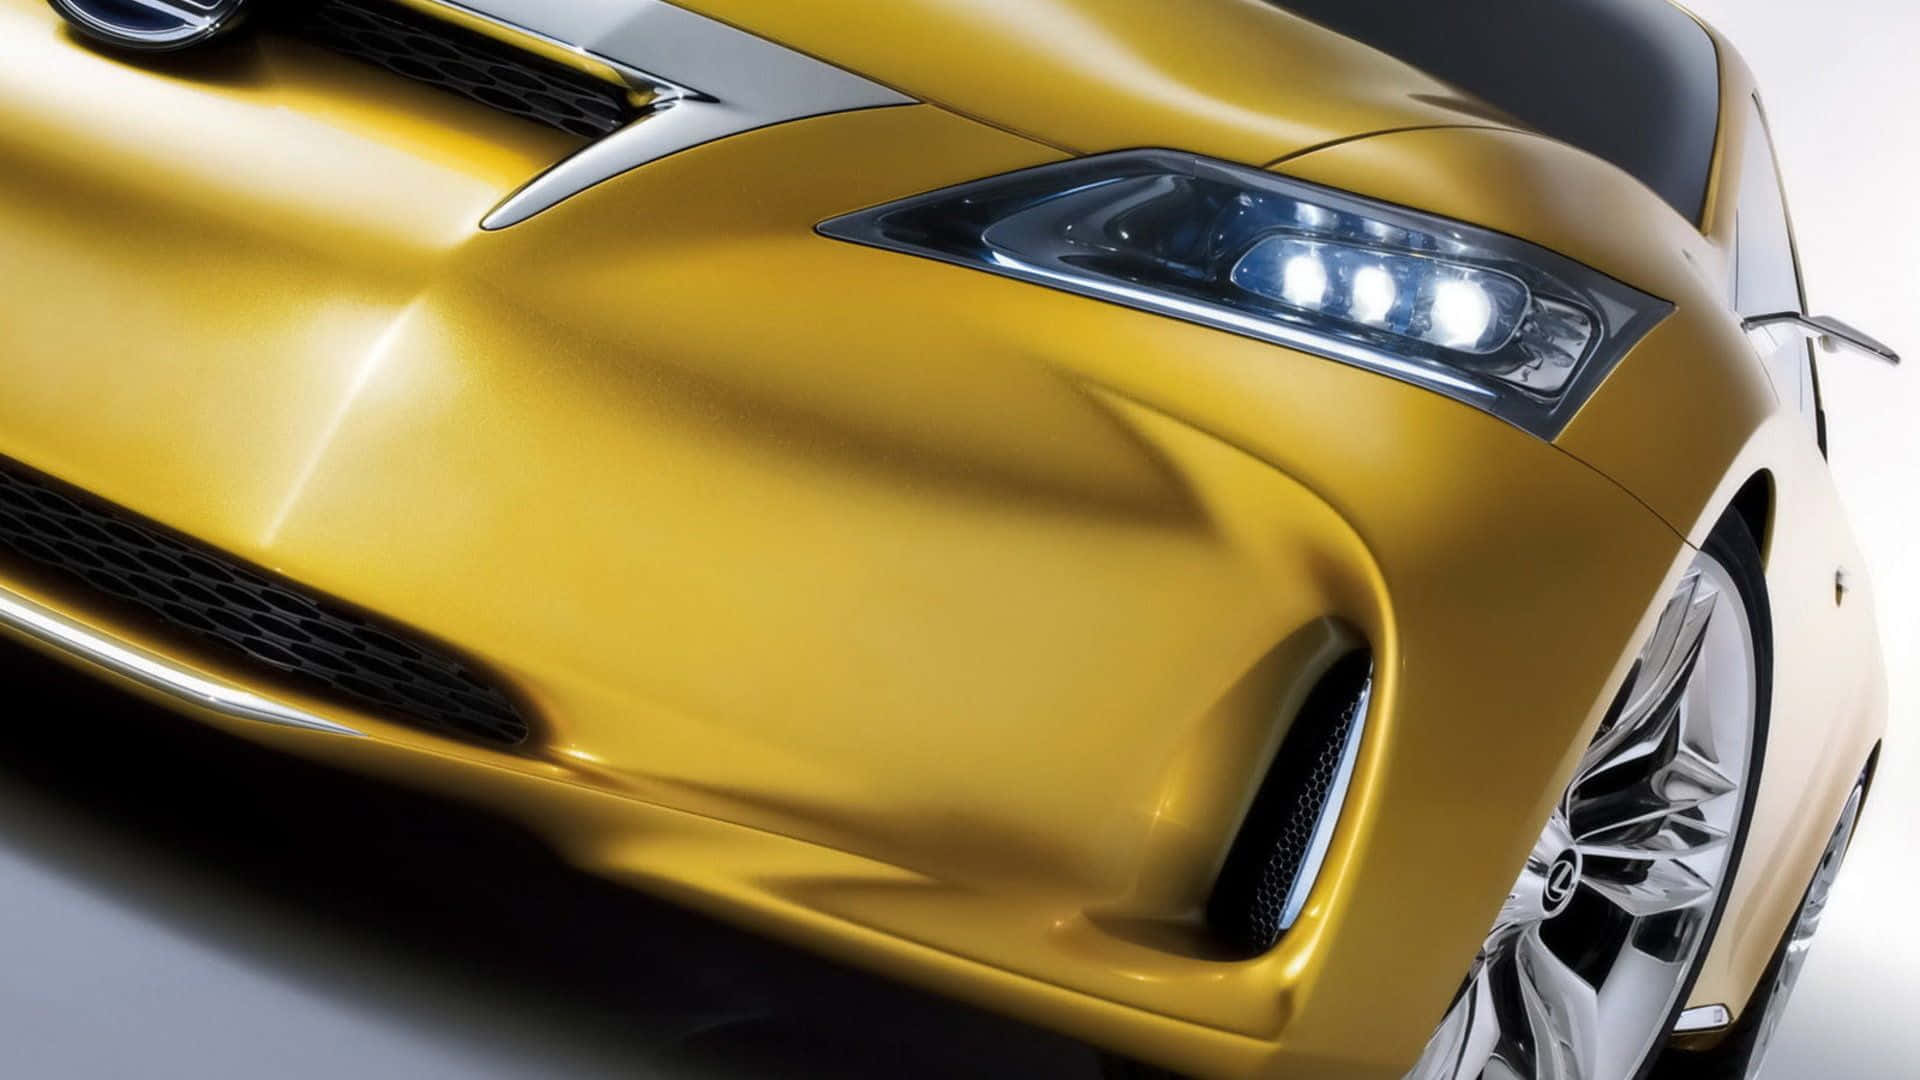 Sleek Yellow Car in Action Wallpaper